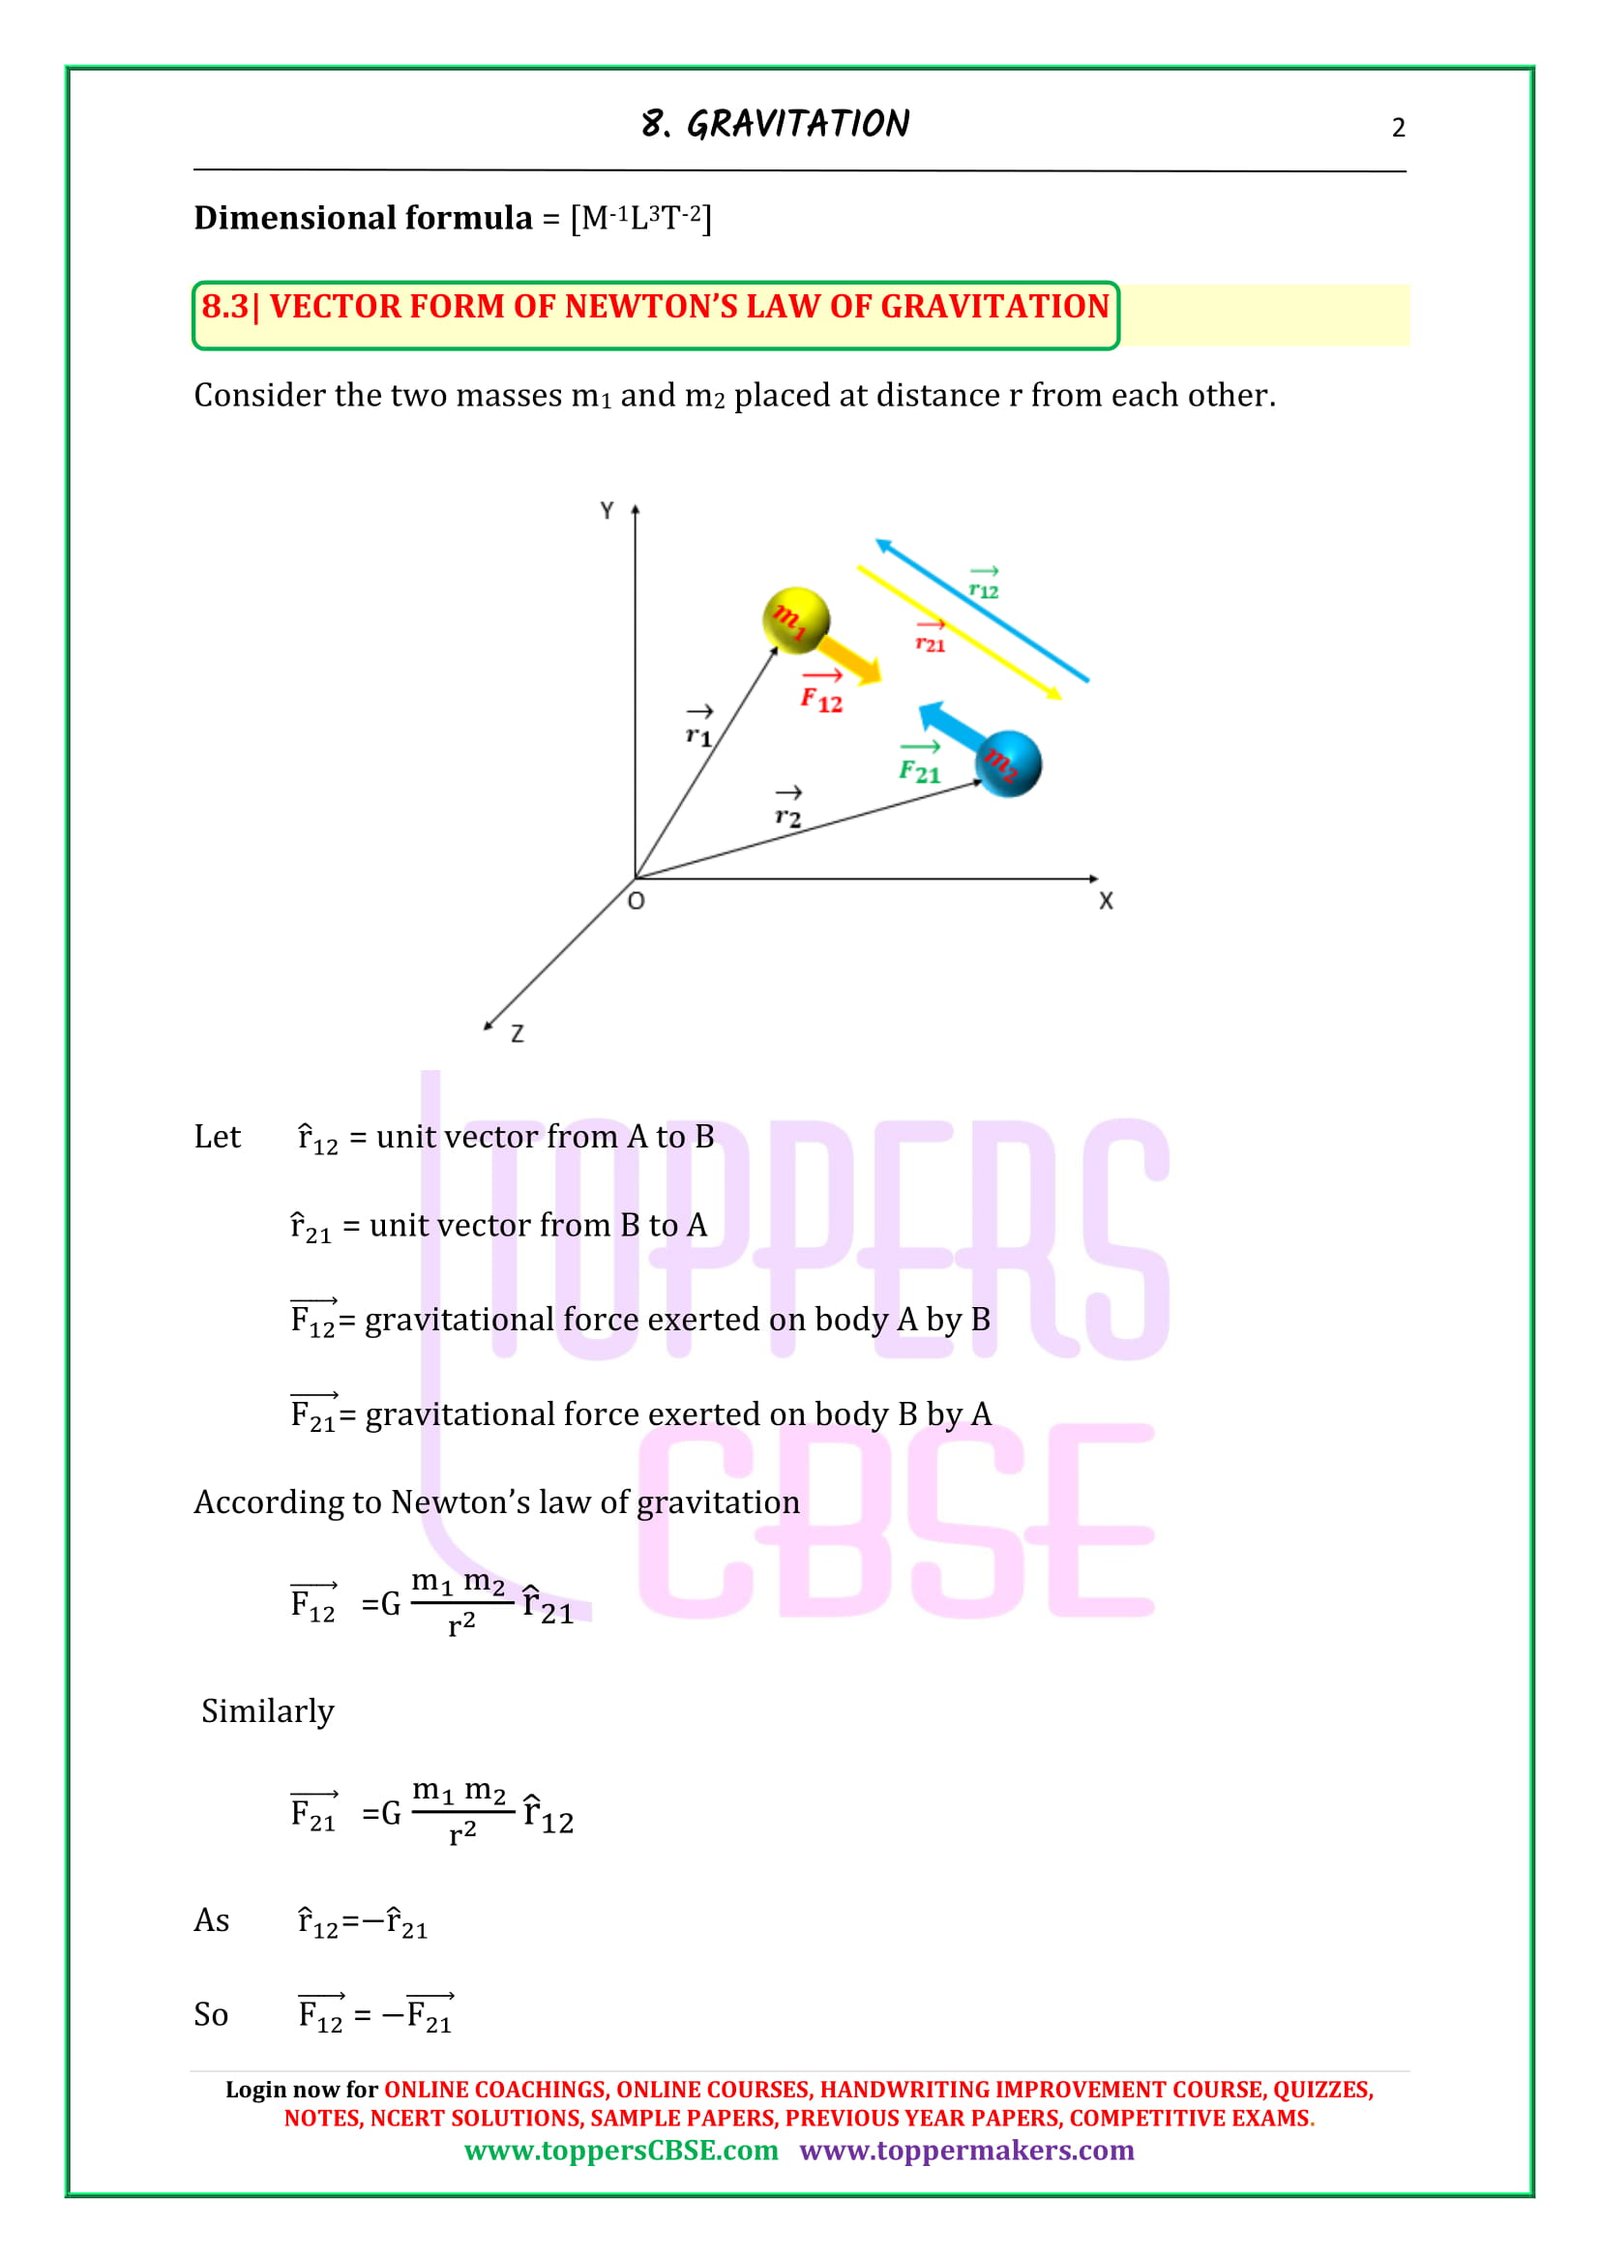 Cbse Class 11 Physics Notes Chapter 8 Gravitation Toppers Cbse Online Coachingncert 3376